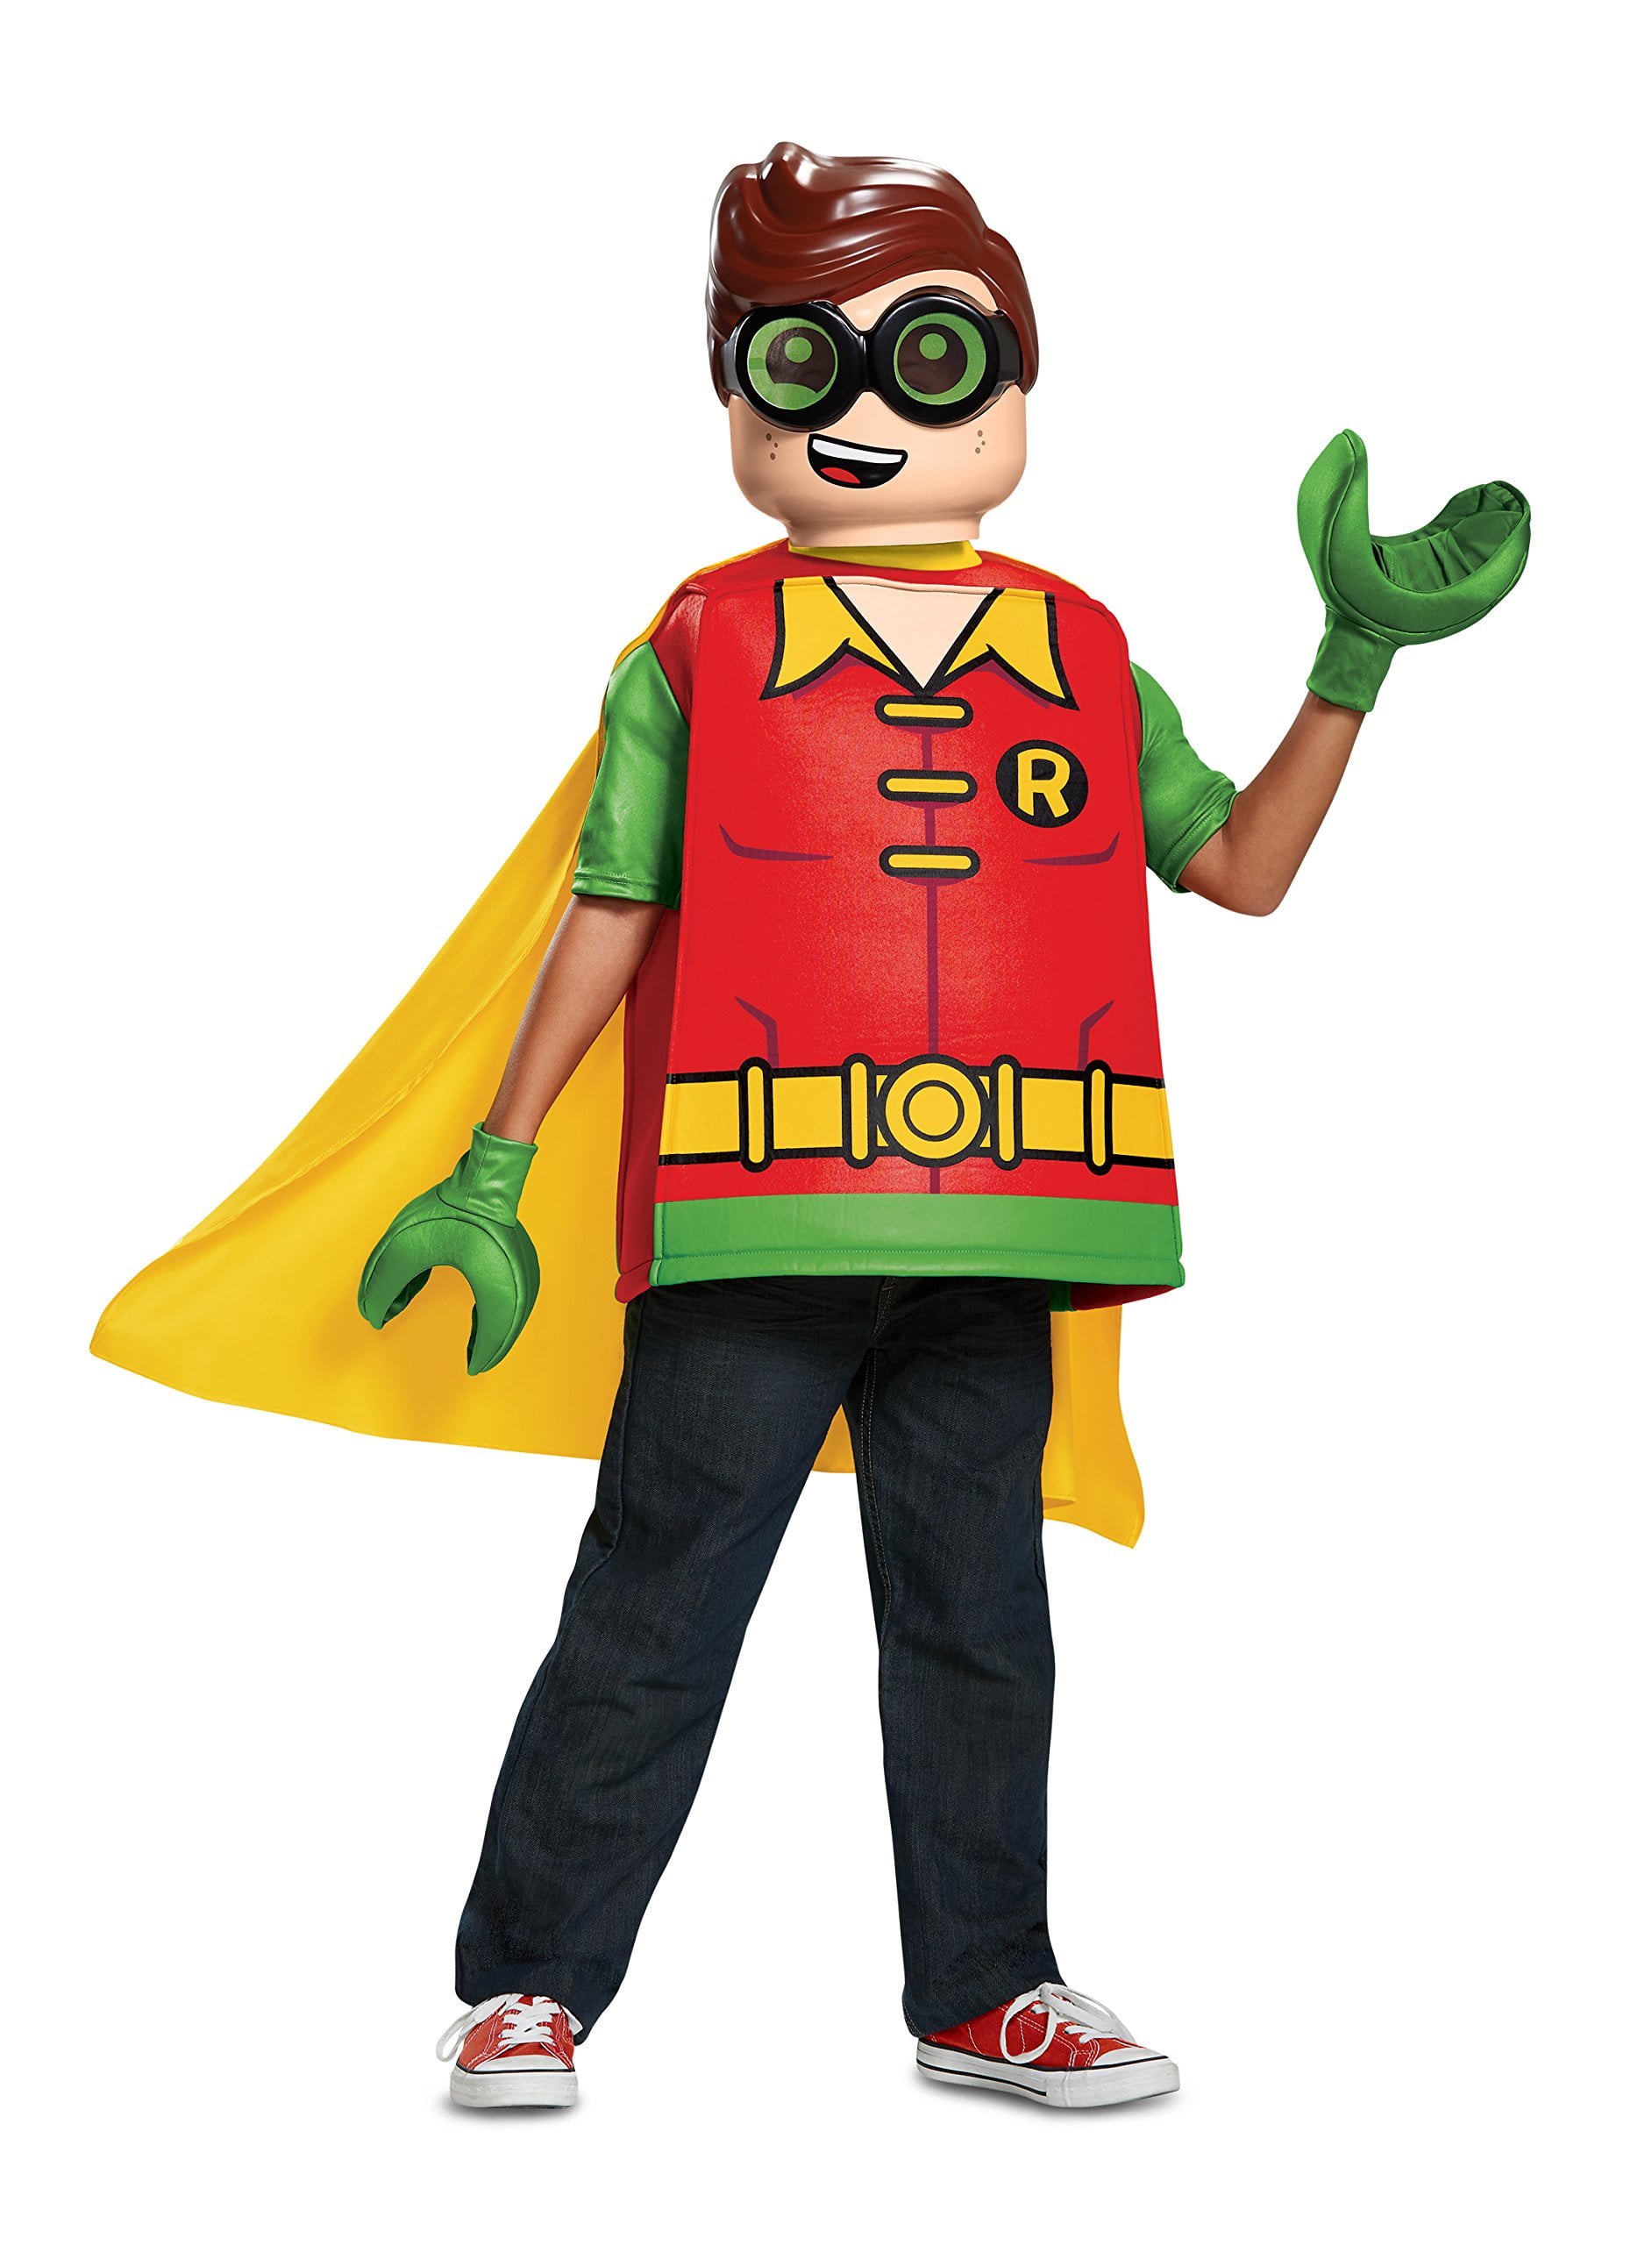 Lego Robin Superhero Hero Batman Children's Bedroom Decal Wall Sticker Picture 